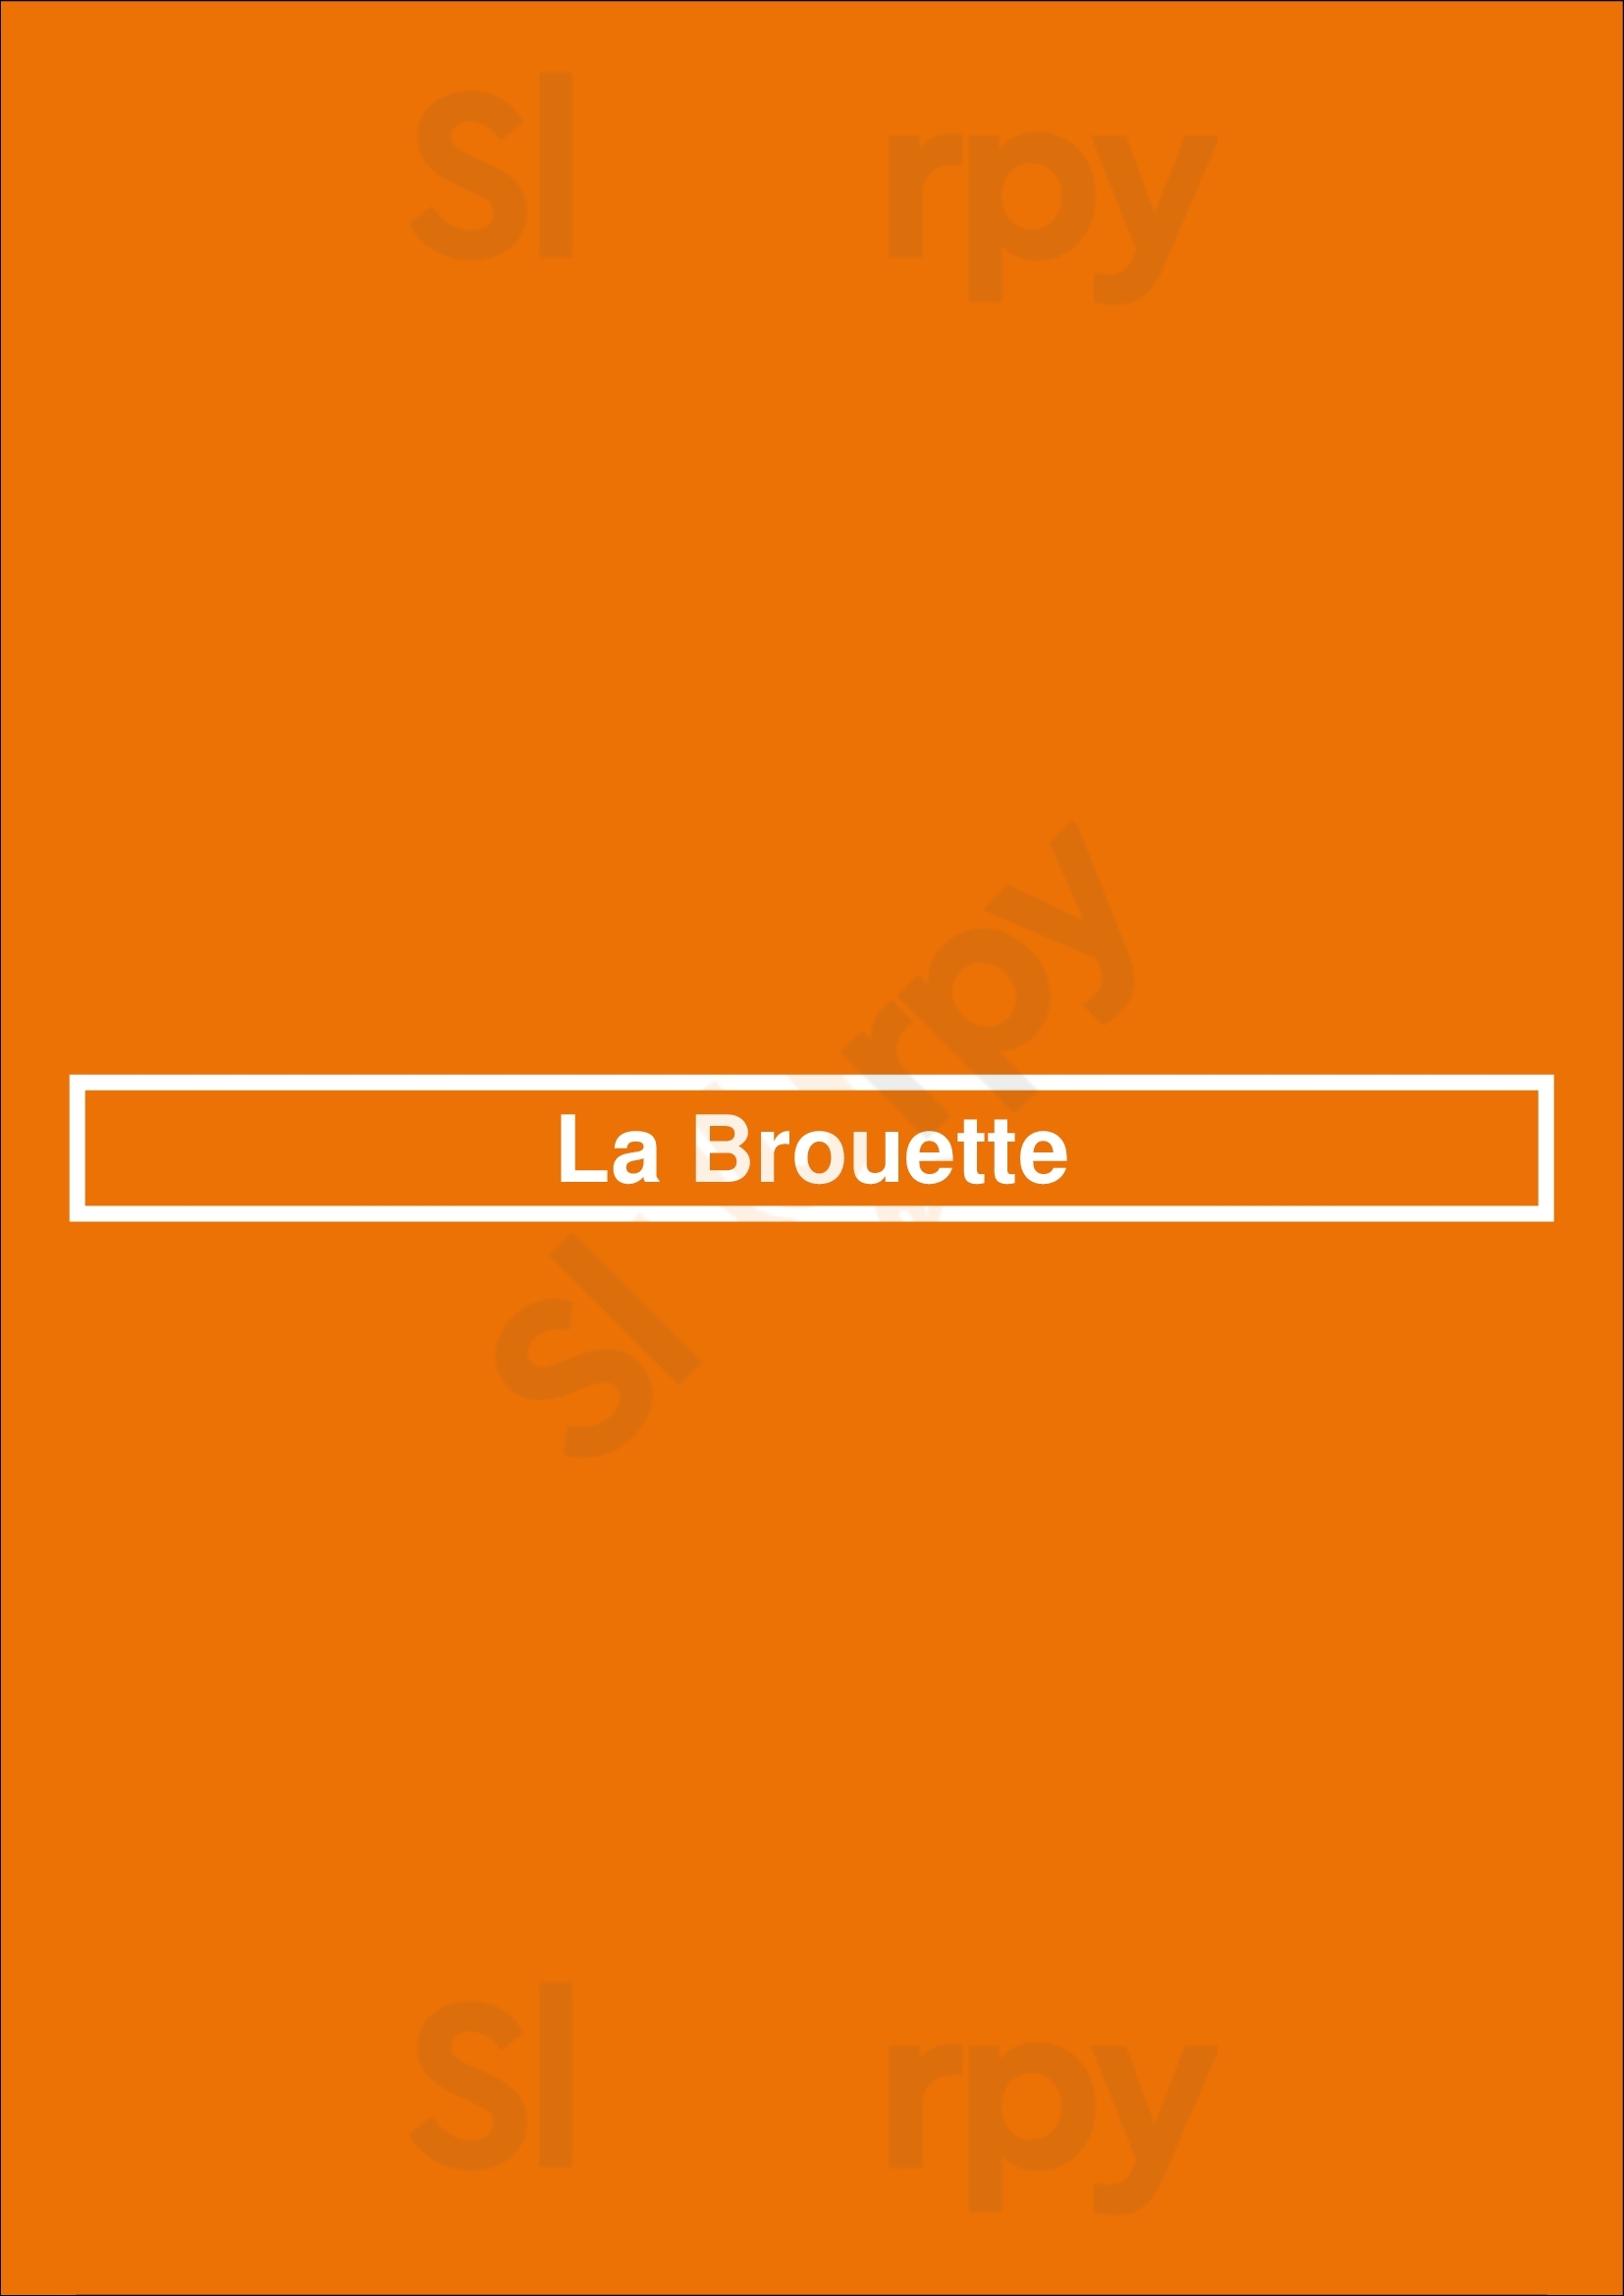 La Brouette Anderlecht Menu - 1